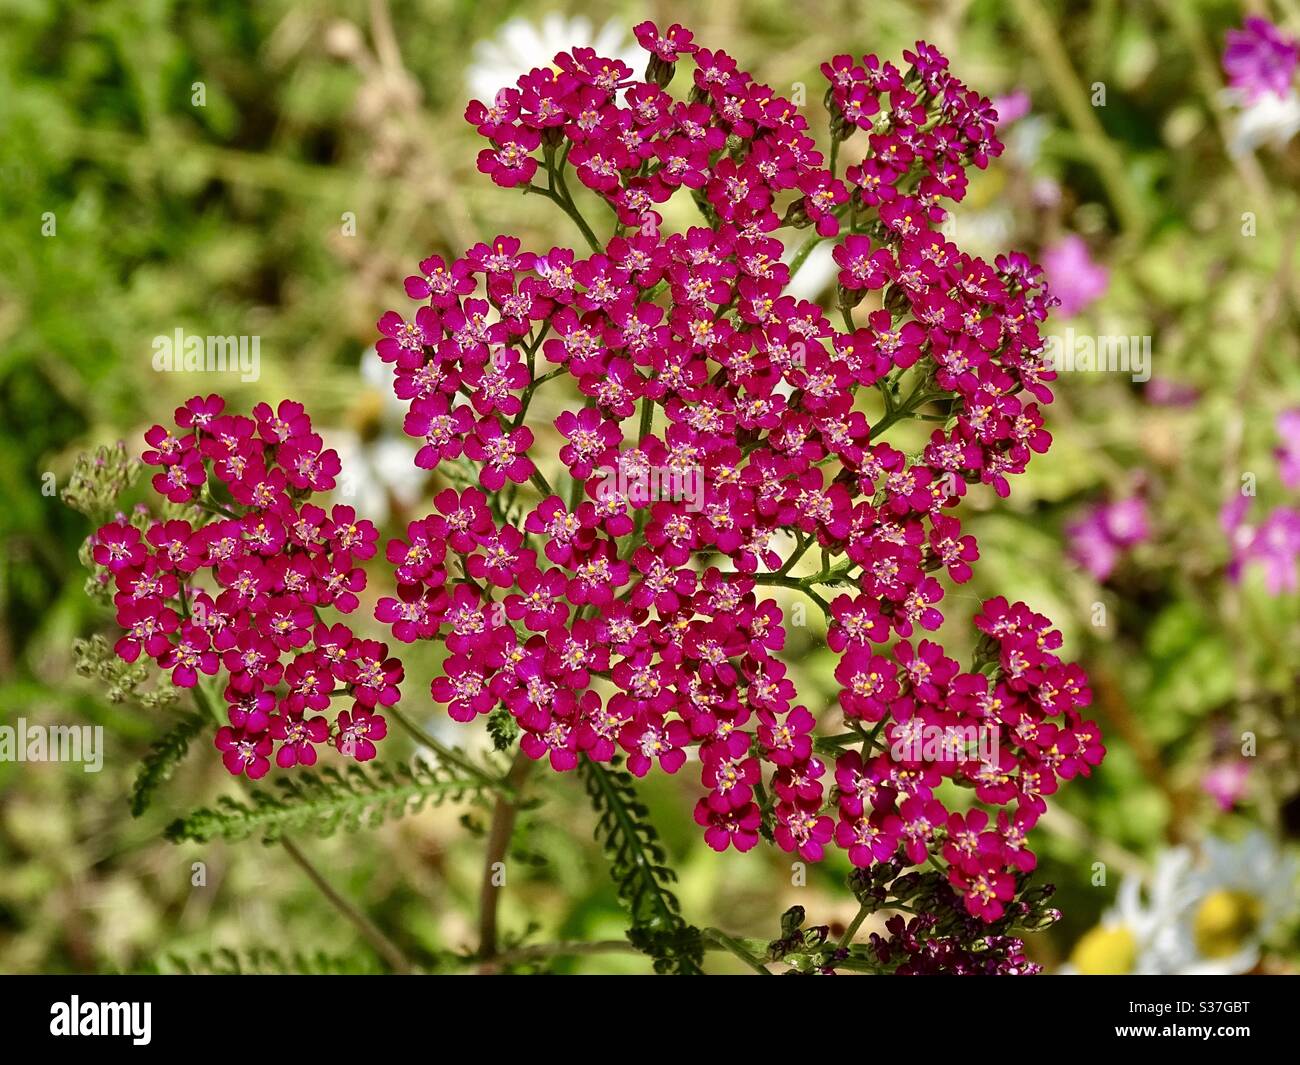 Pink yarrow flowers in a wild flower garden in England Stock Photo